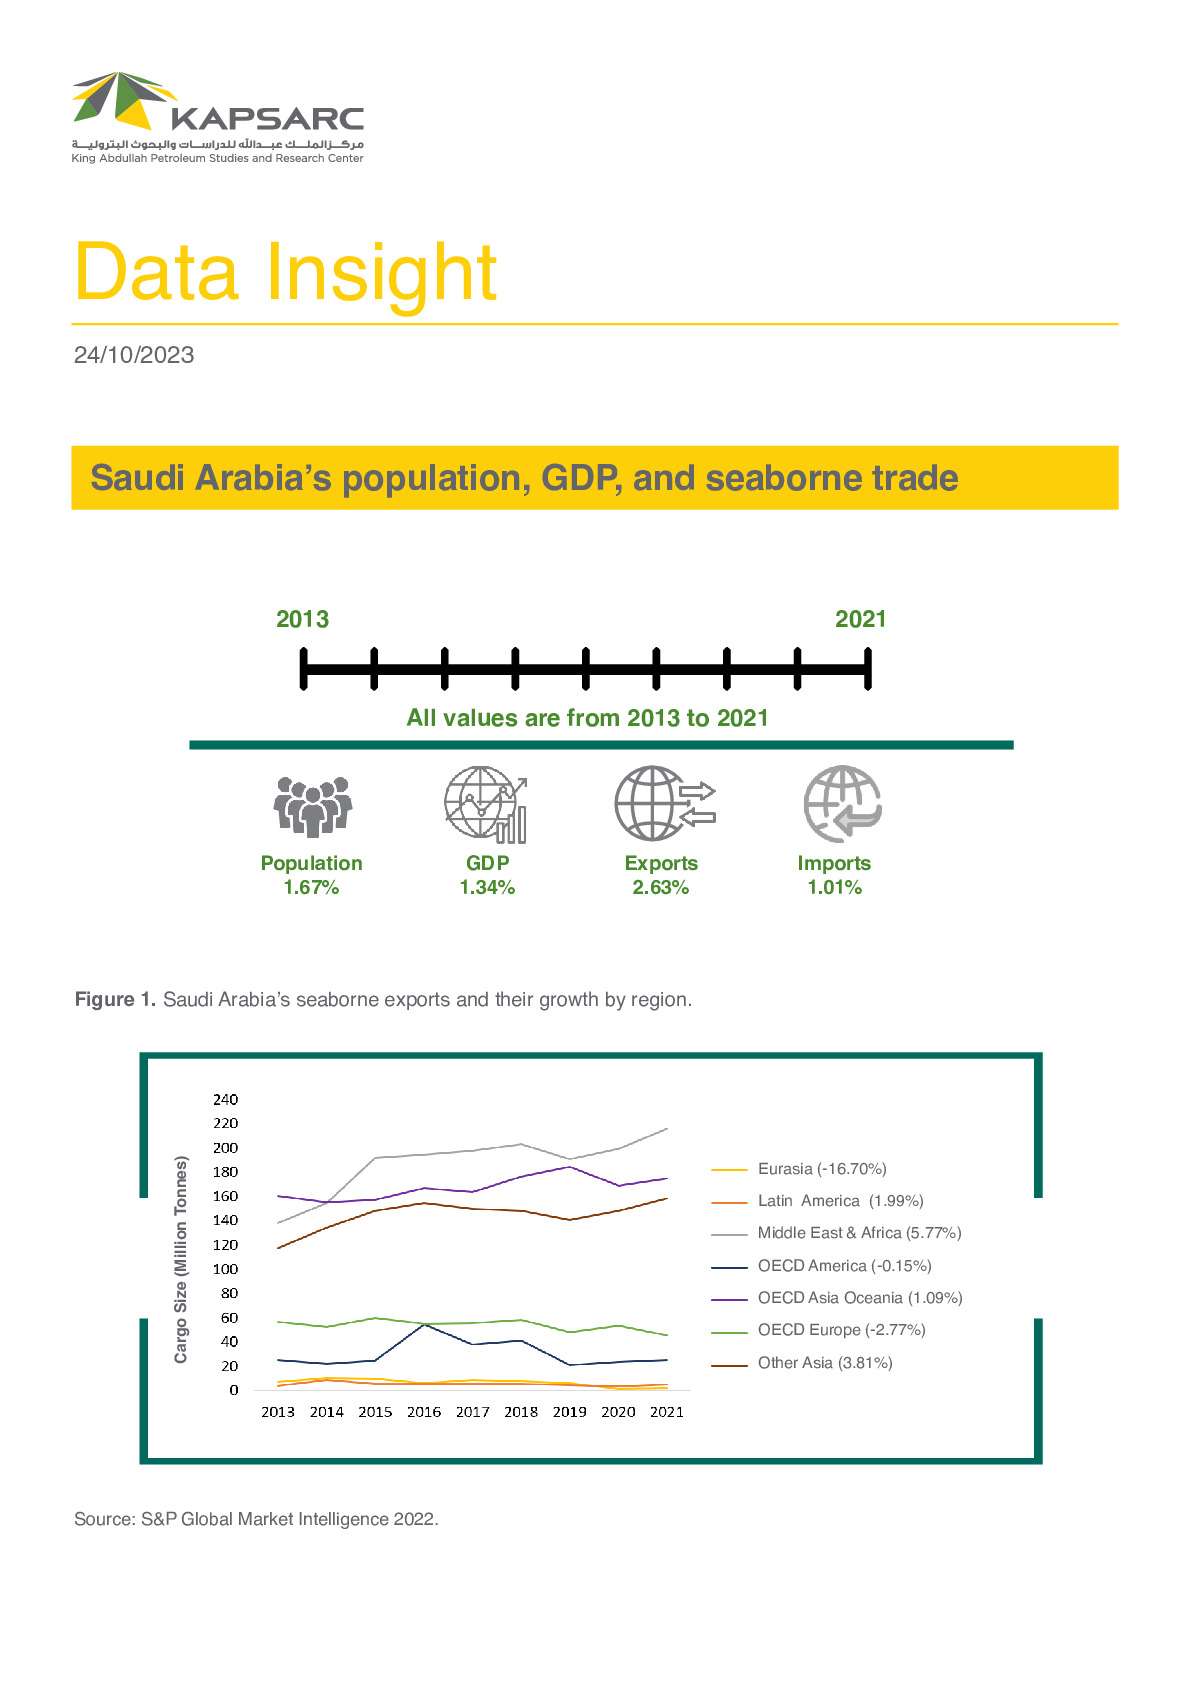 Saudi Arabia’s Population, GDP, and Seaborne Trade